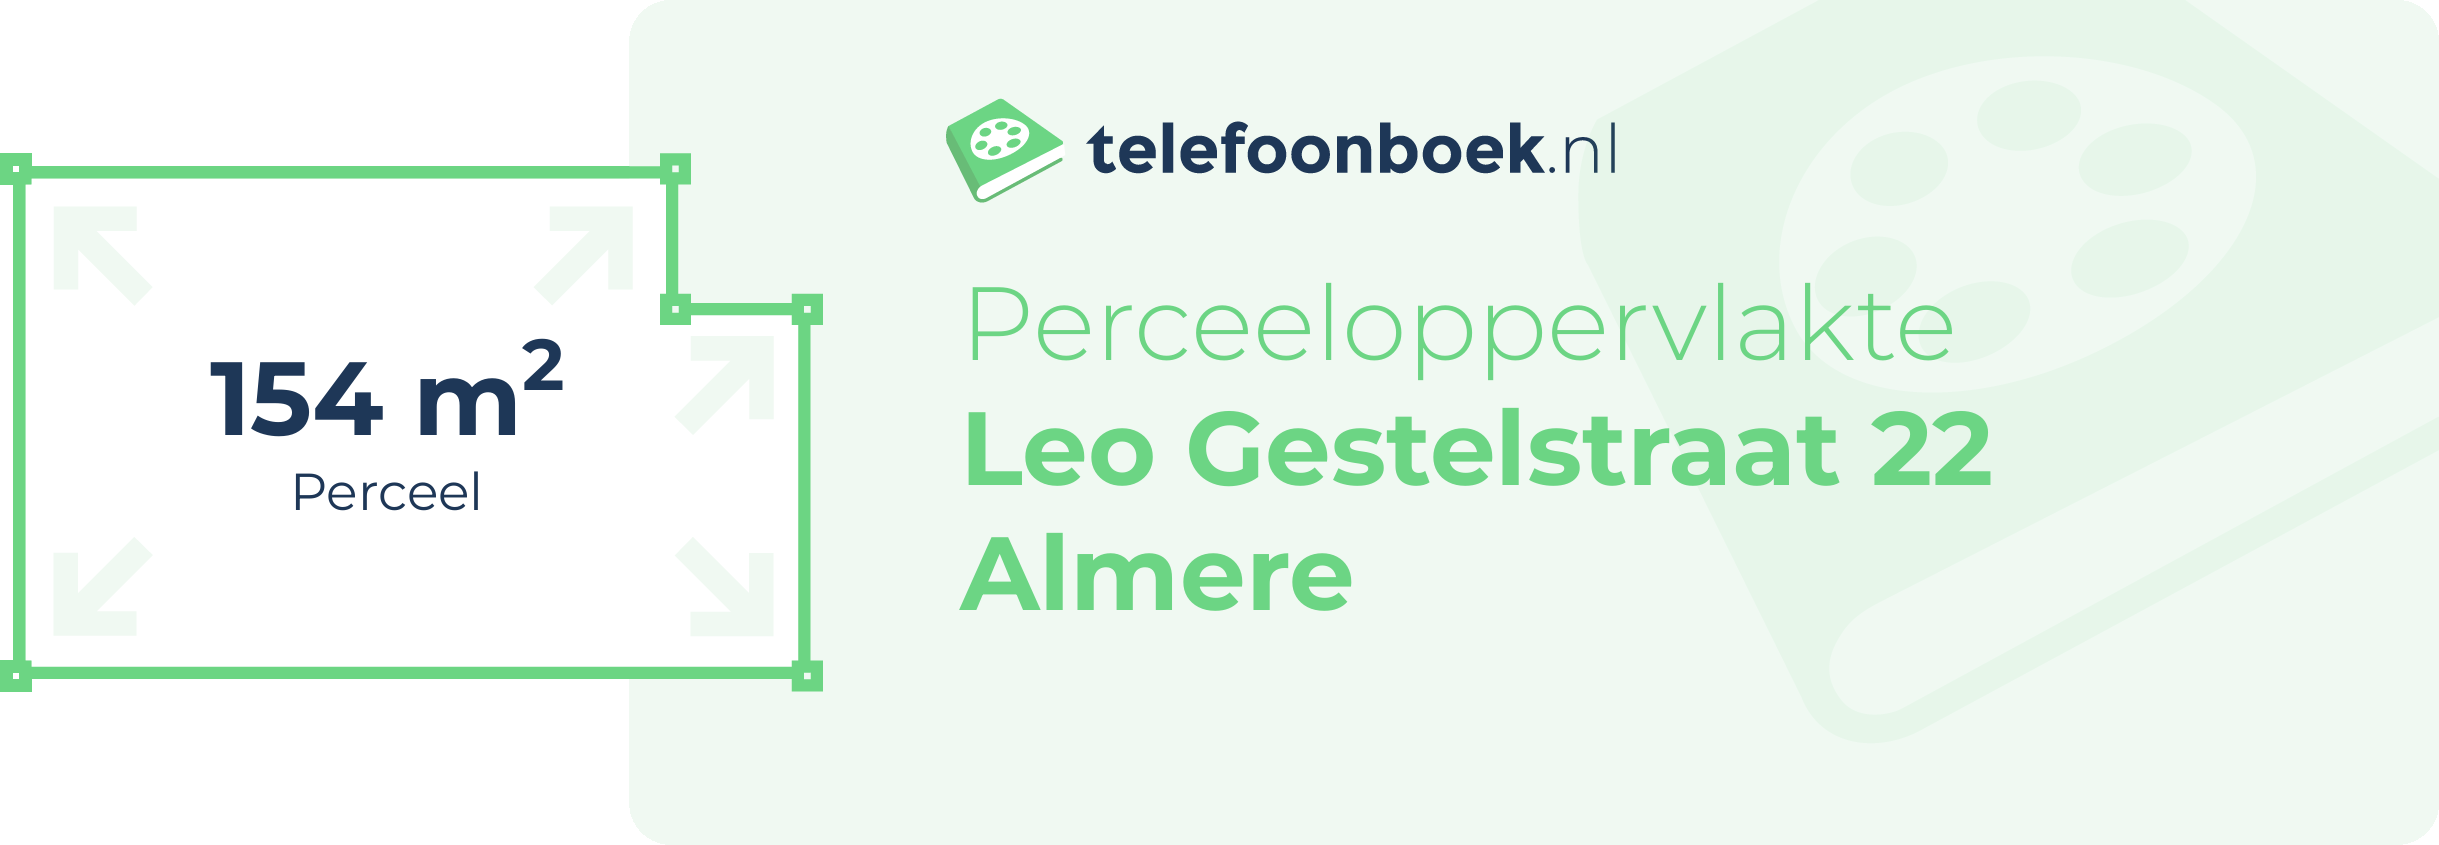 Perceeloppervlakte Leo Gestelstraat 22 Almere